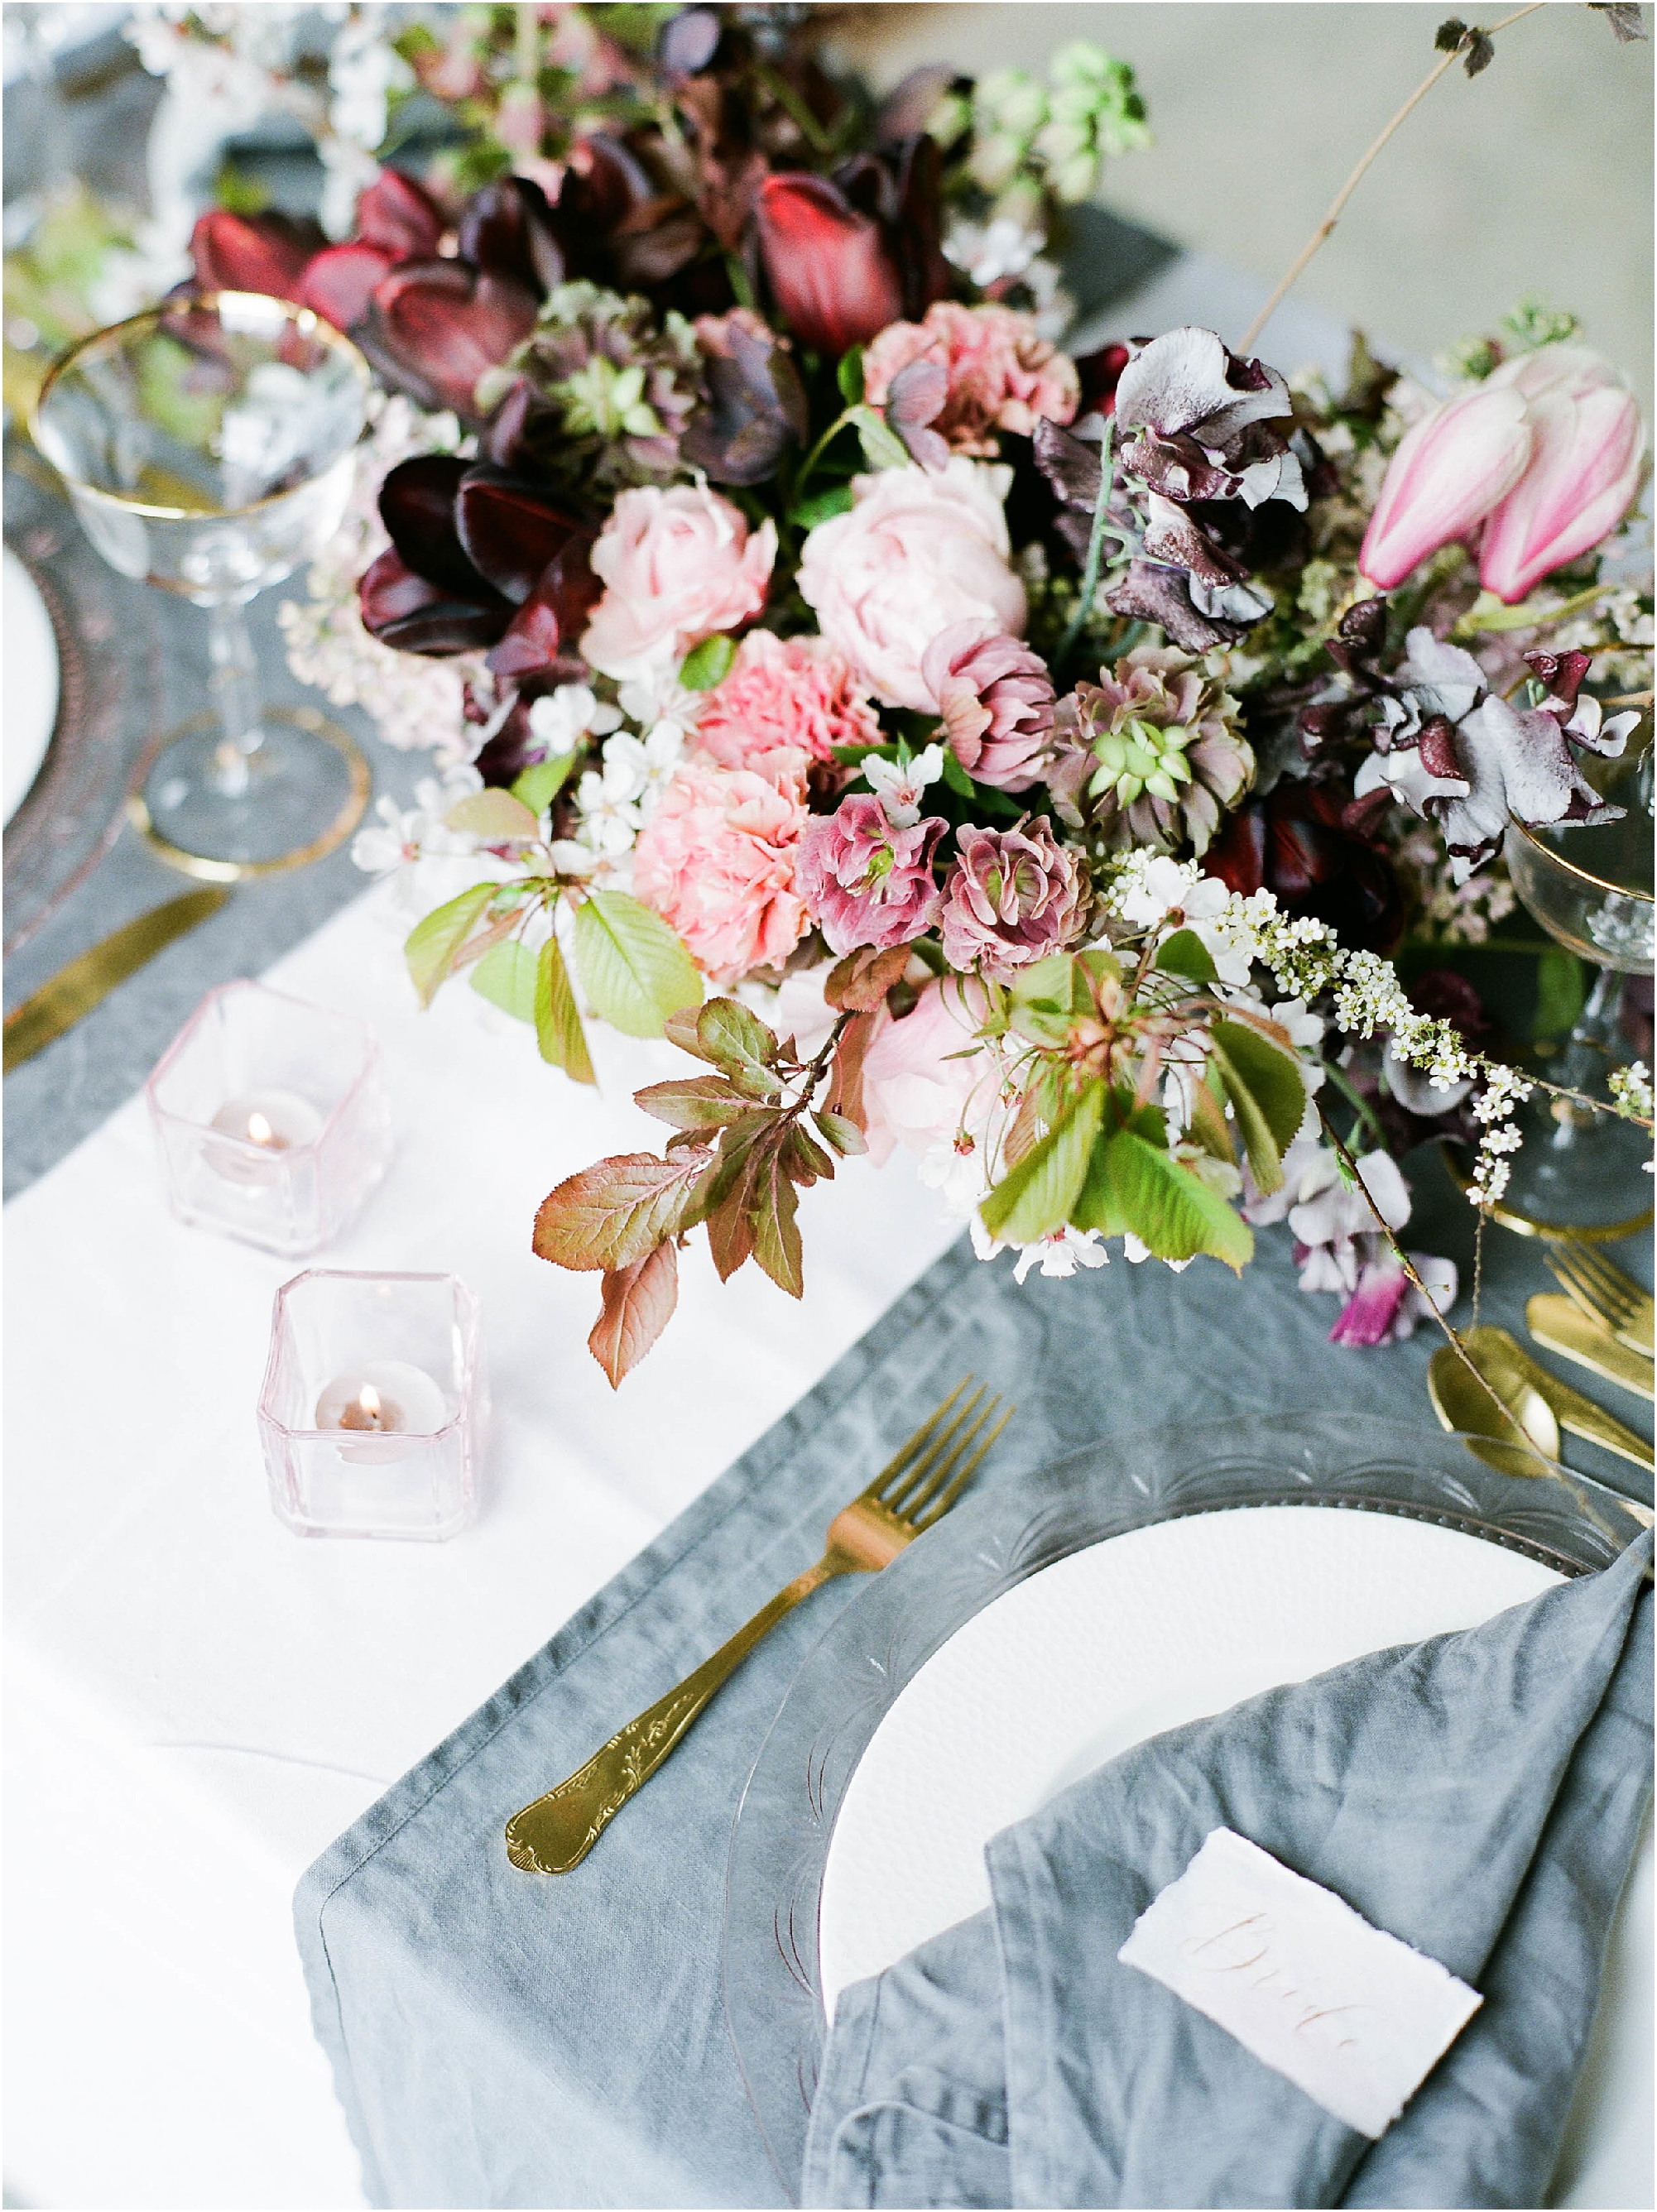 flowers on wedding breakfast table at spring wedding